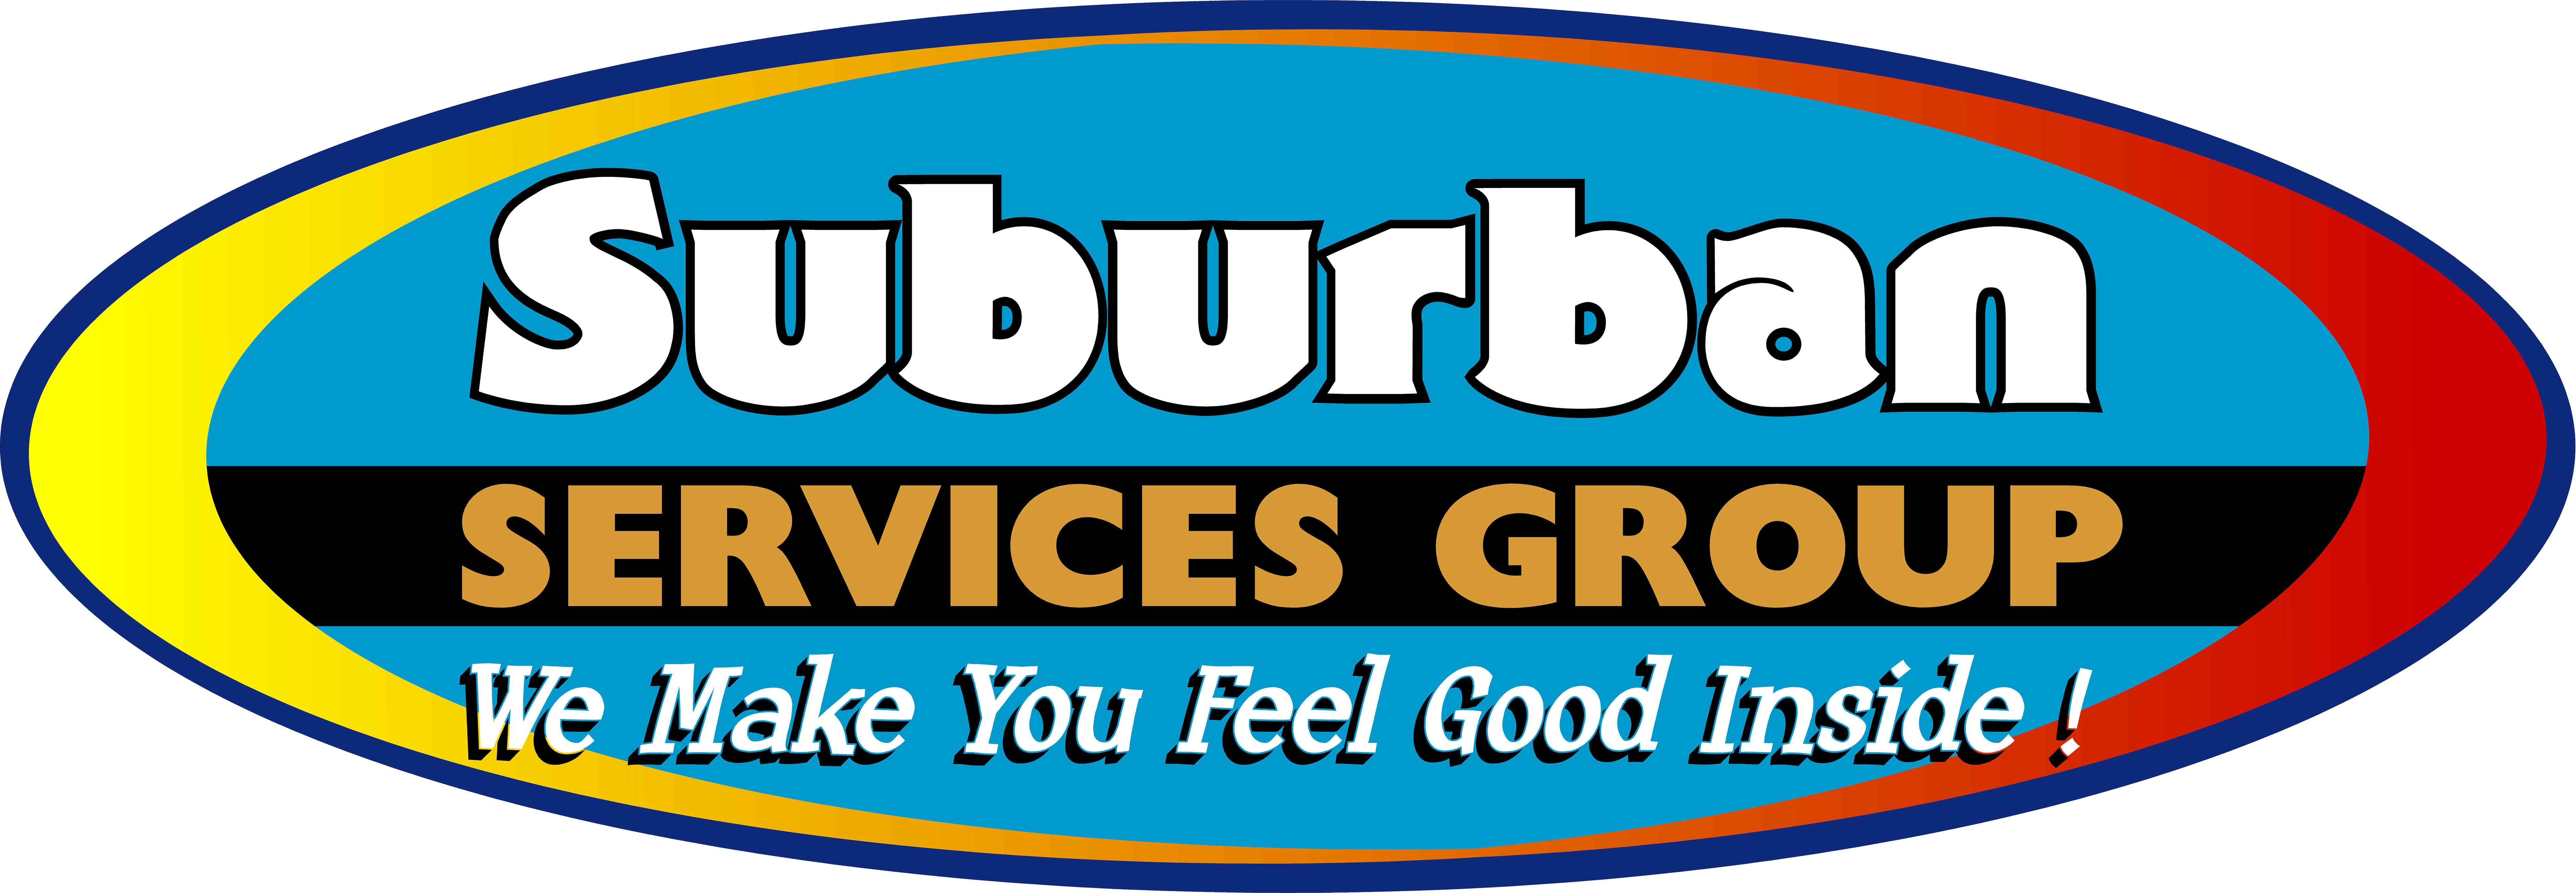 Suburban Services Group Generac Logo R - Parallel (7694x2666)